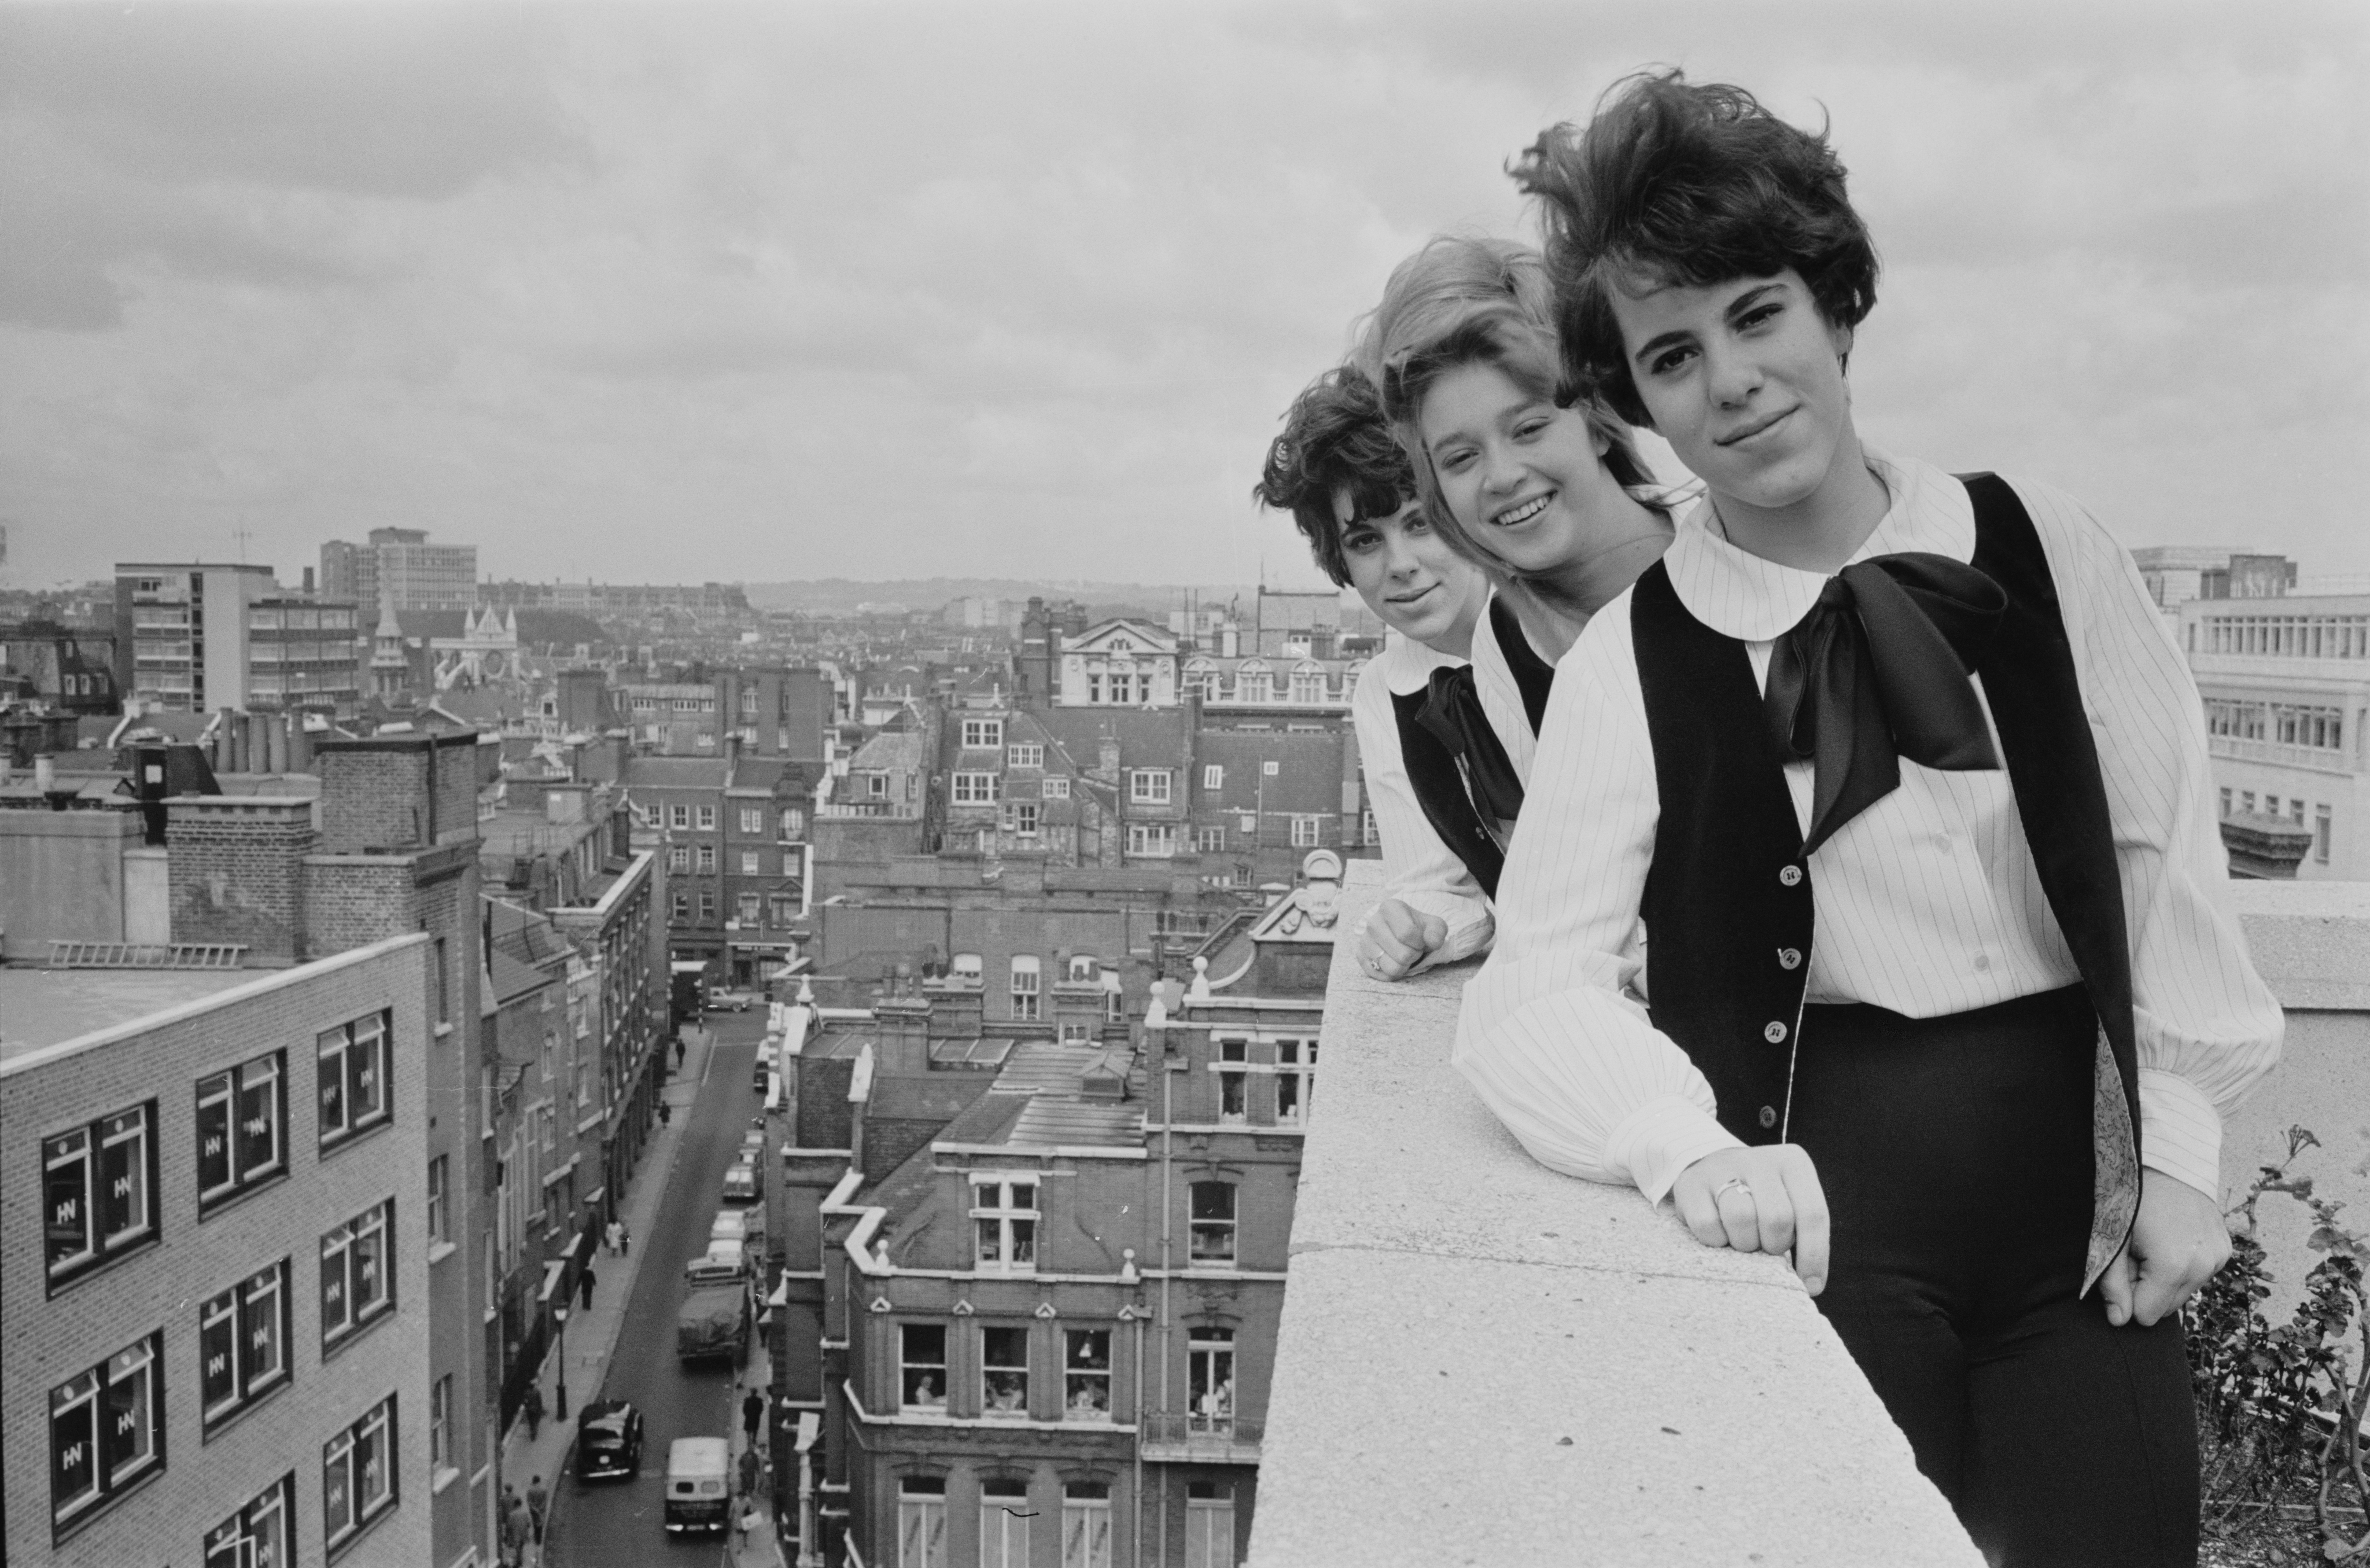 Margie Ganser, Mary Weiss, Liz Weiss posing as the Shangri-Las in London, UK, October 24, 1964. | Source: Getty Images